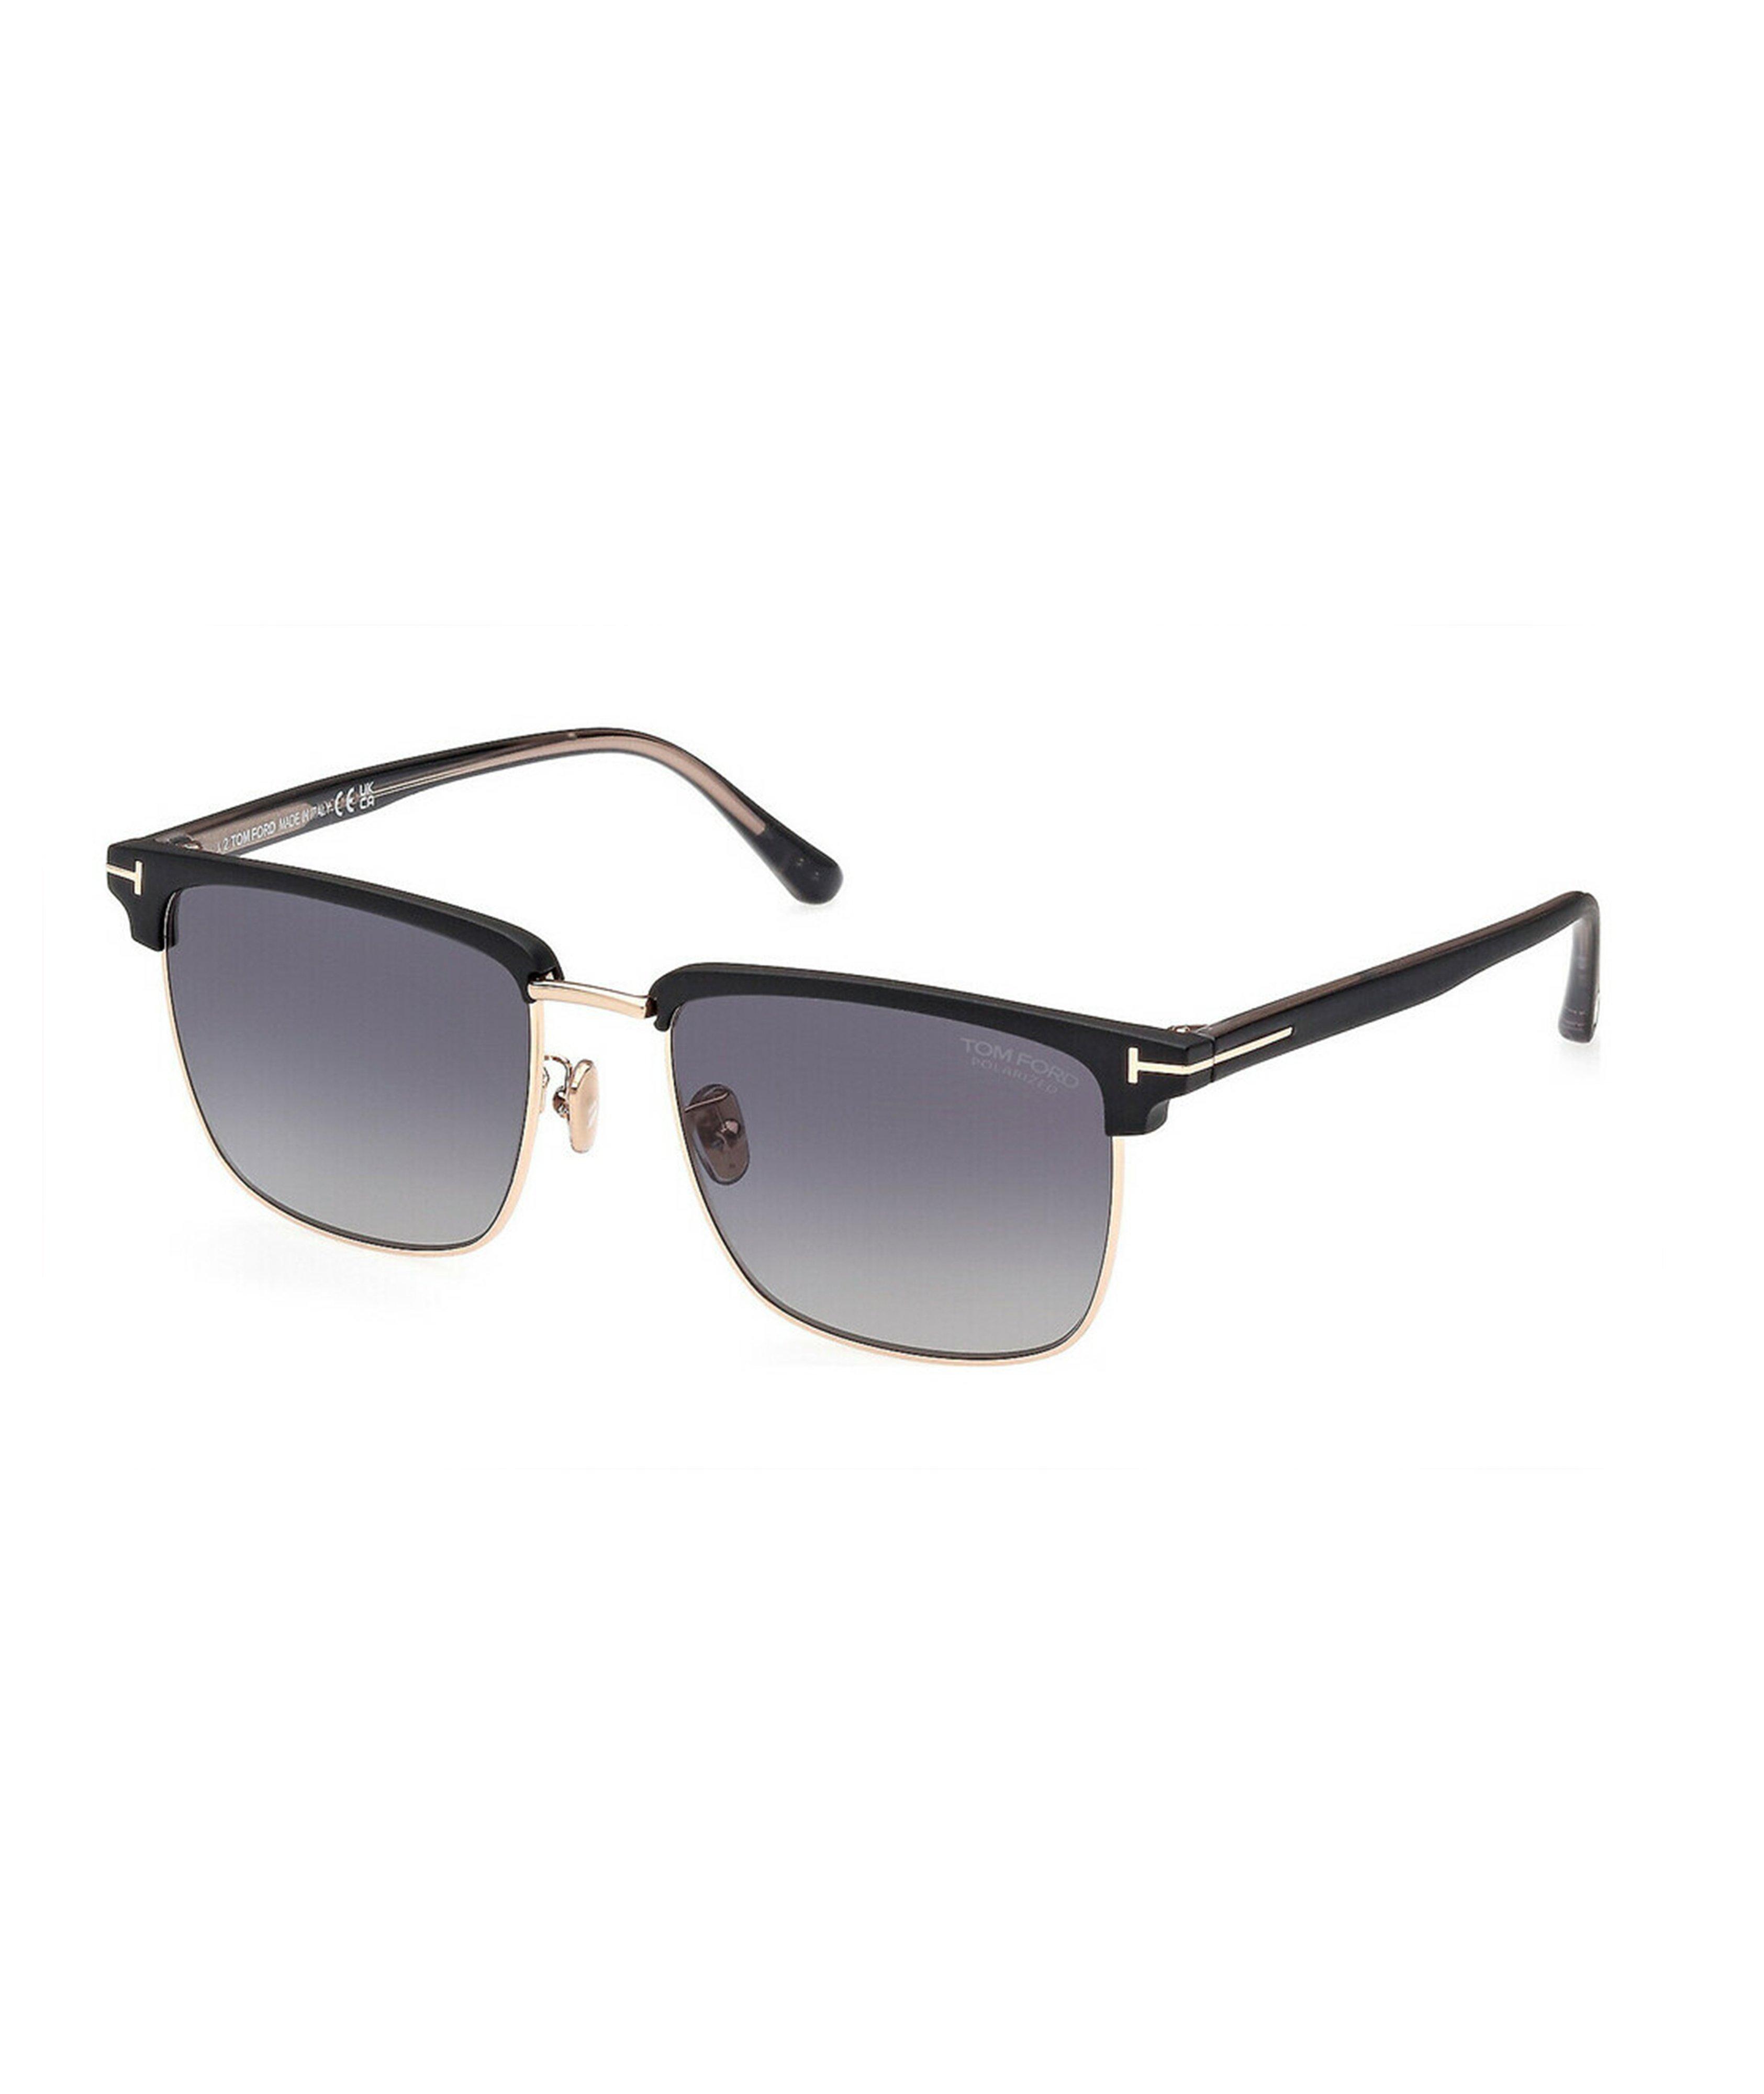 TOM FORD Hudson Square Clubmaster Frame Sunglasses